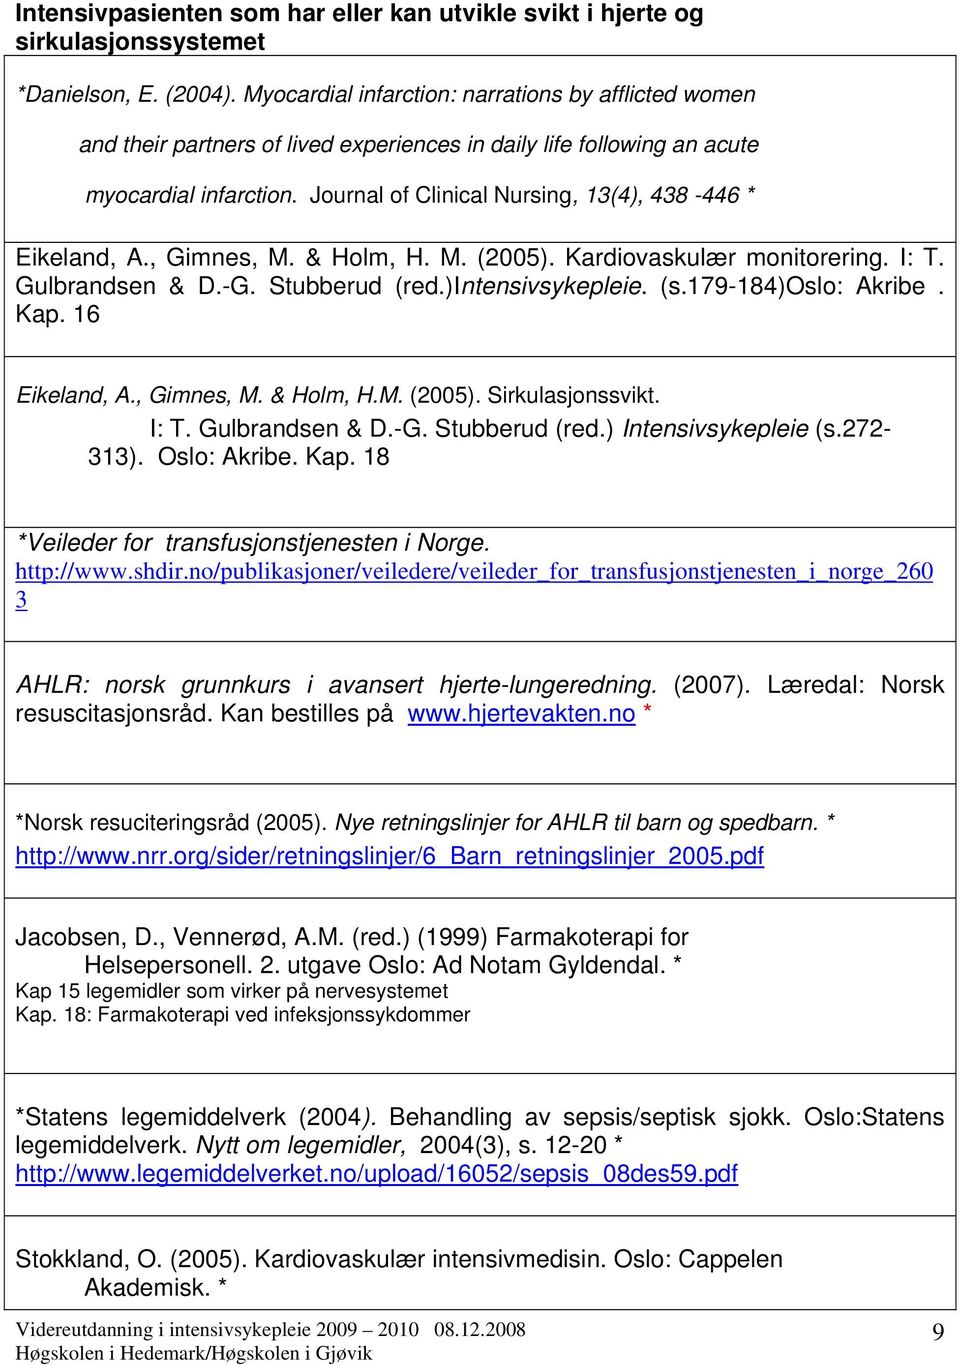 Journal of Clinical Nursing, 13(4), 438-446 * Eikeland, A., Gimnes, M. & Holm, H. M. (2005). Kardiovaskulær monitorering. I: T. Gulbrandsen & D.-G. Stubberud (red.)intensivsykepleie. (s.